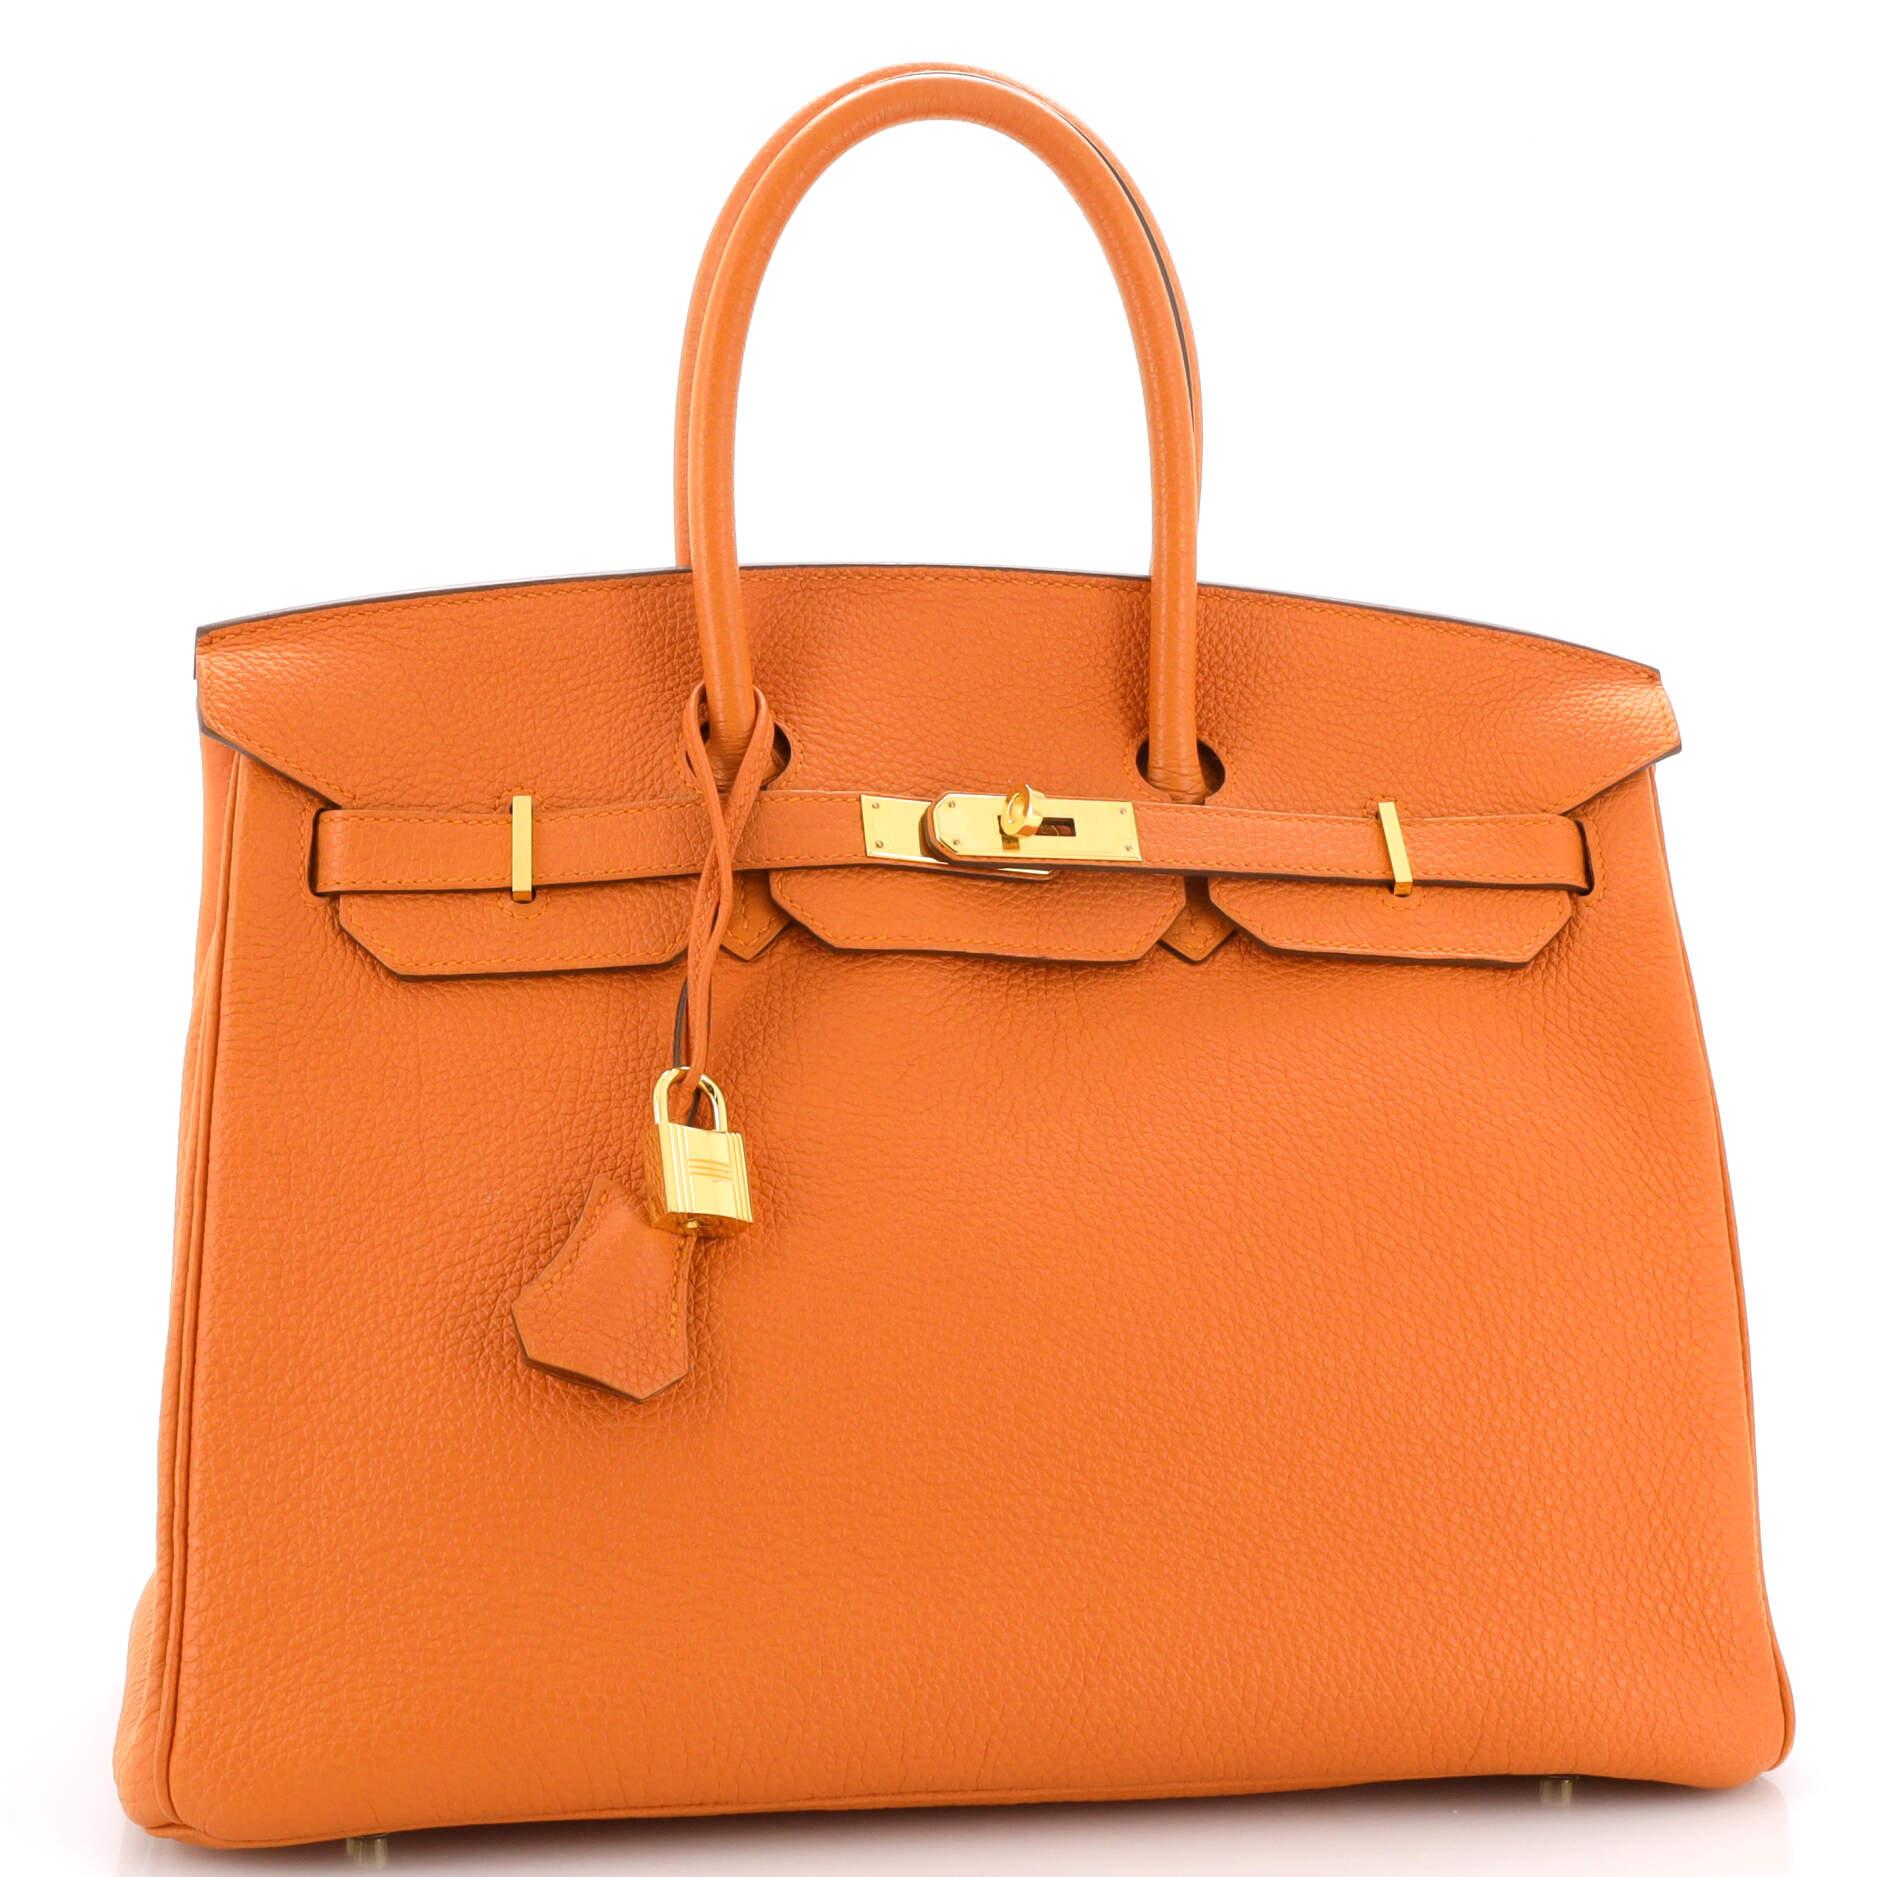 Hermès Sac à main Birkin orange H Togo avec finitions métalliques dorées 35 Bon état à NY, NY